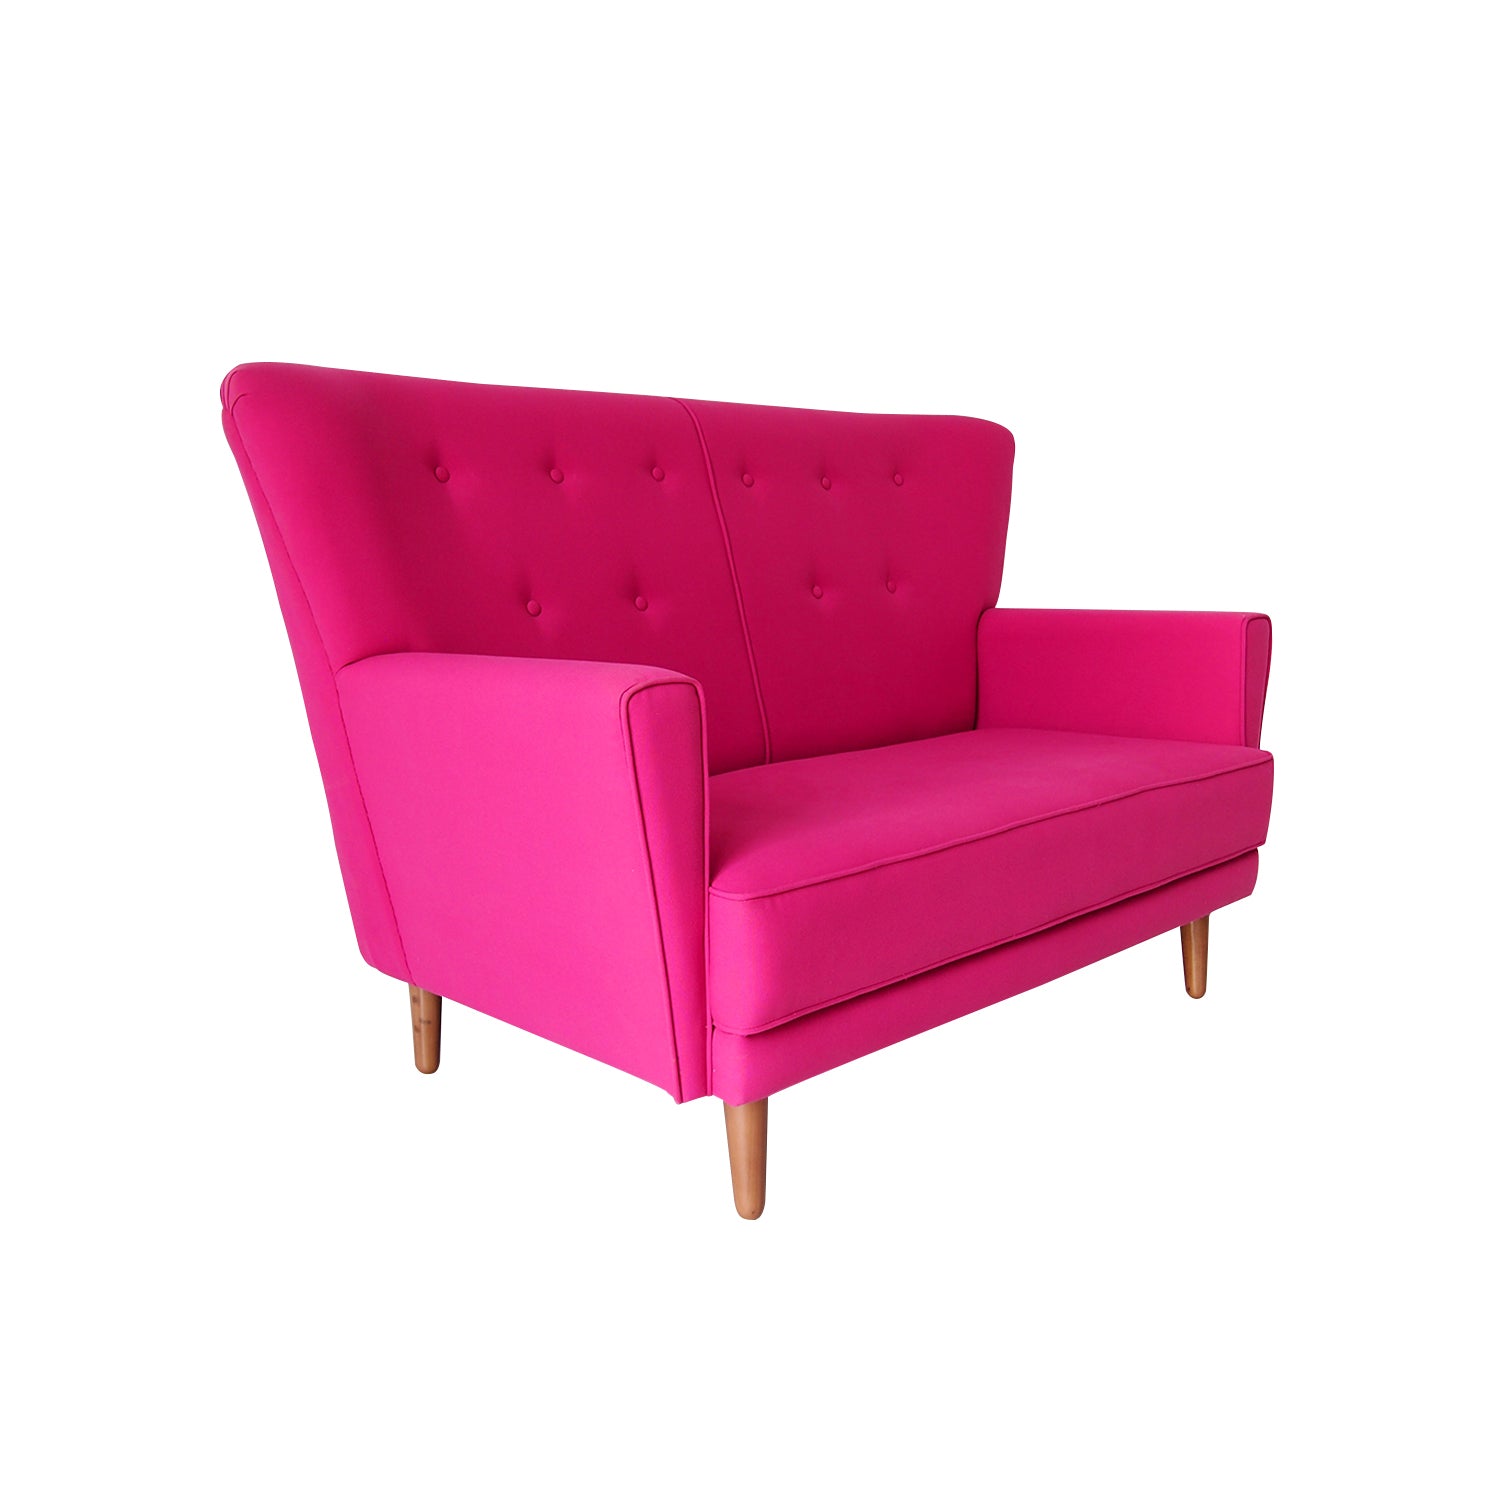 Asmara Pink Sofa 2 Seater